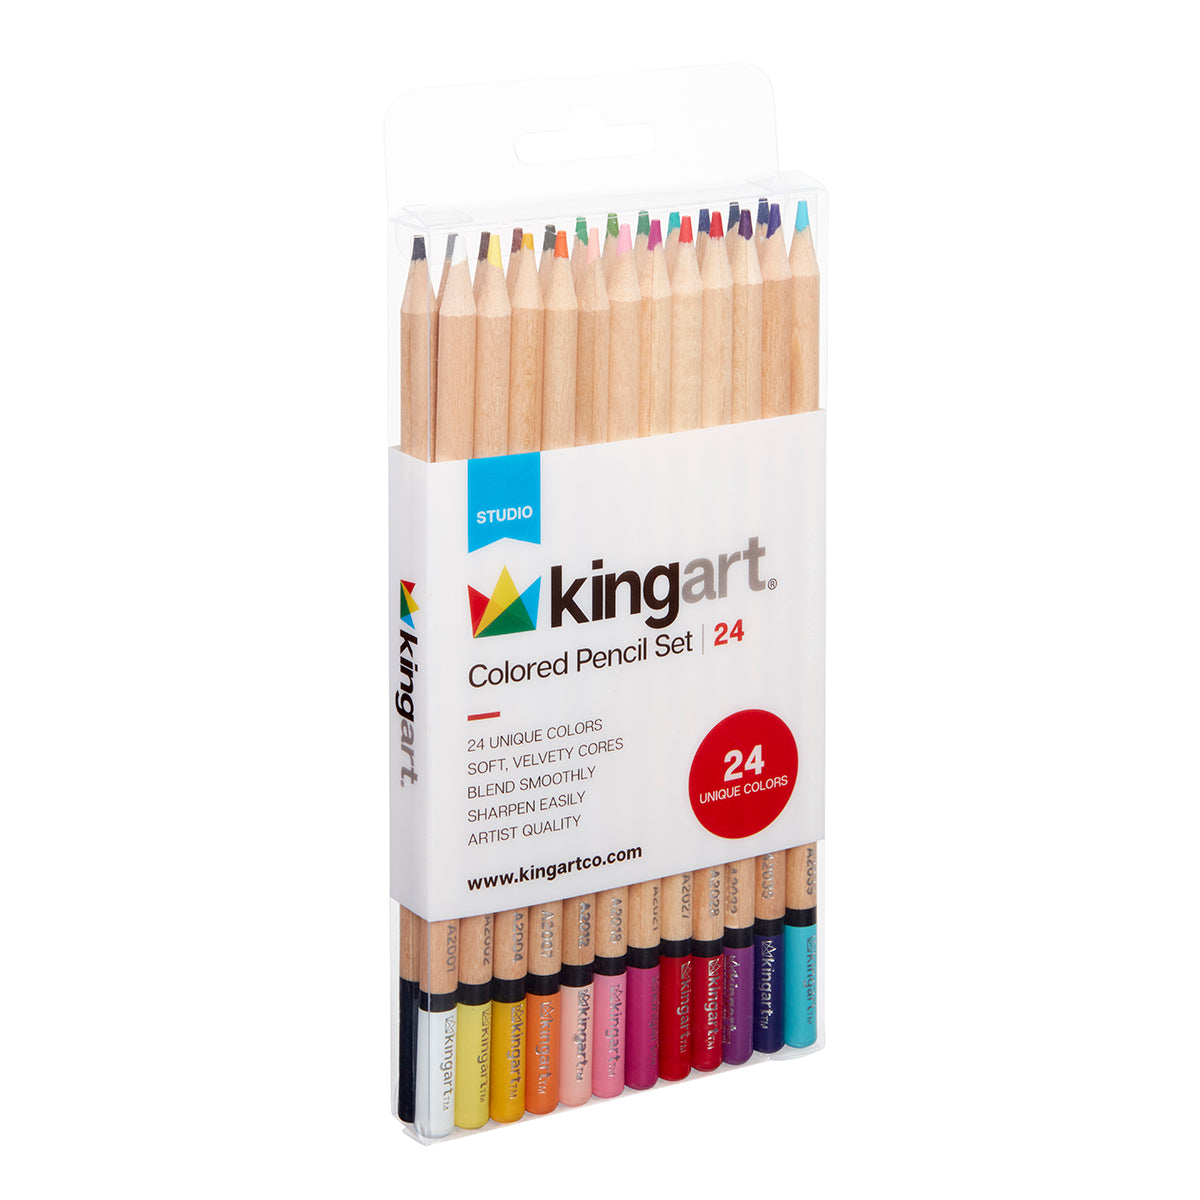 Pastel Pencils 72 Wooden Box - Effortless Blending and Versatility